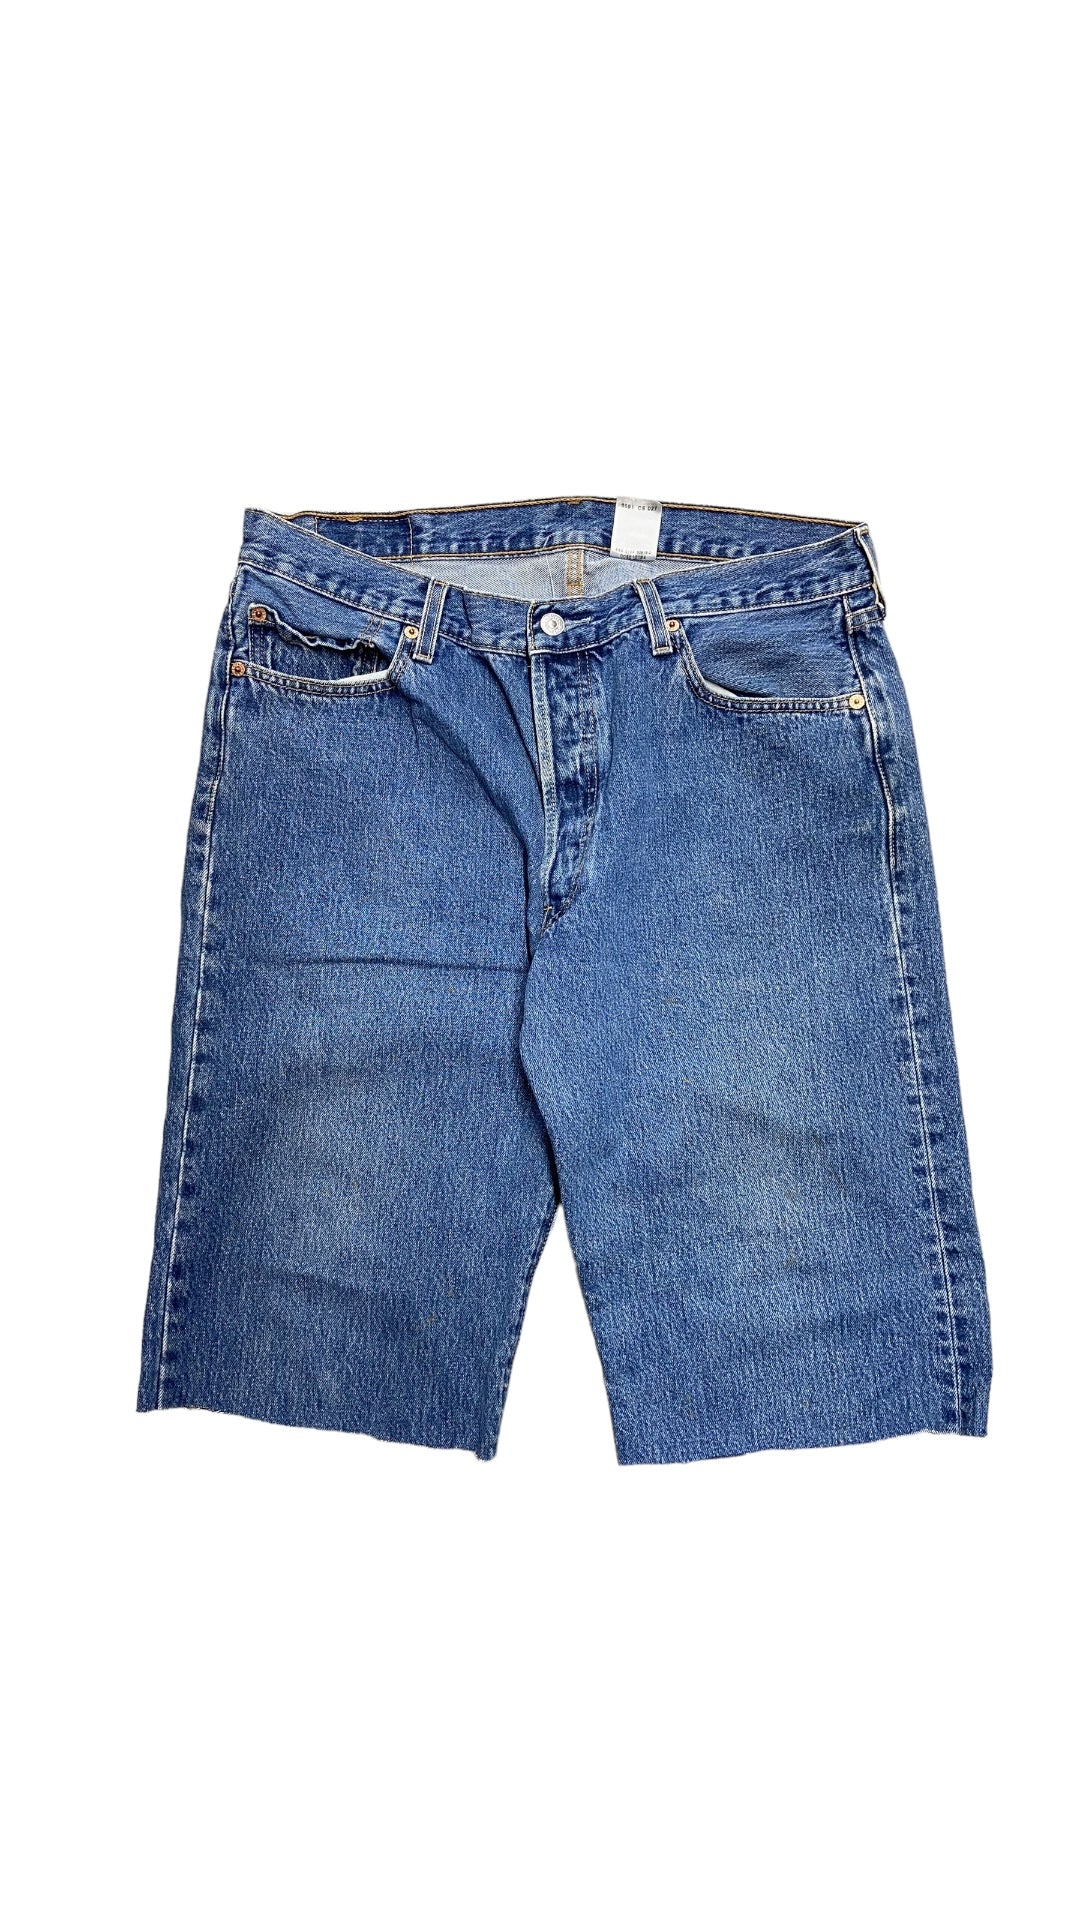 VTG Levi's 501 cutoff Blue Denim shorts Sz 34